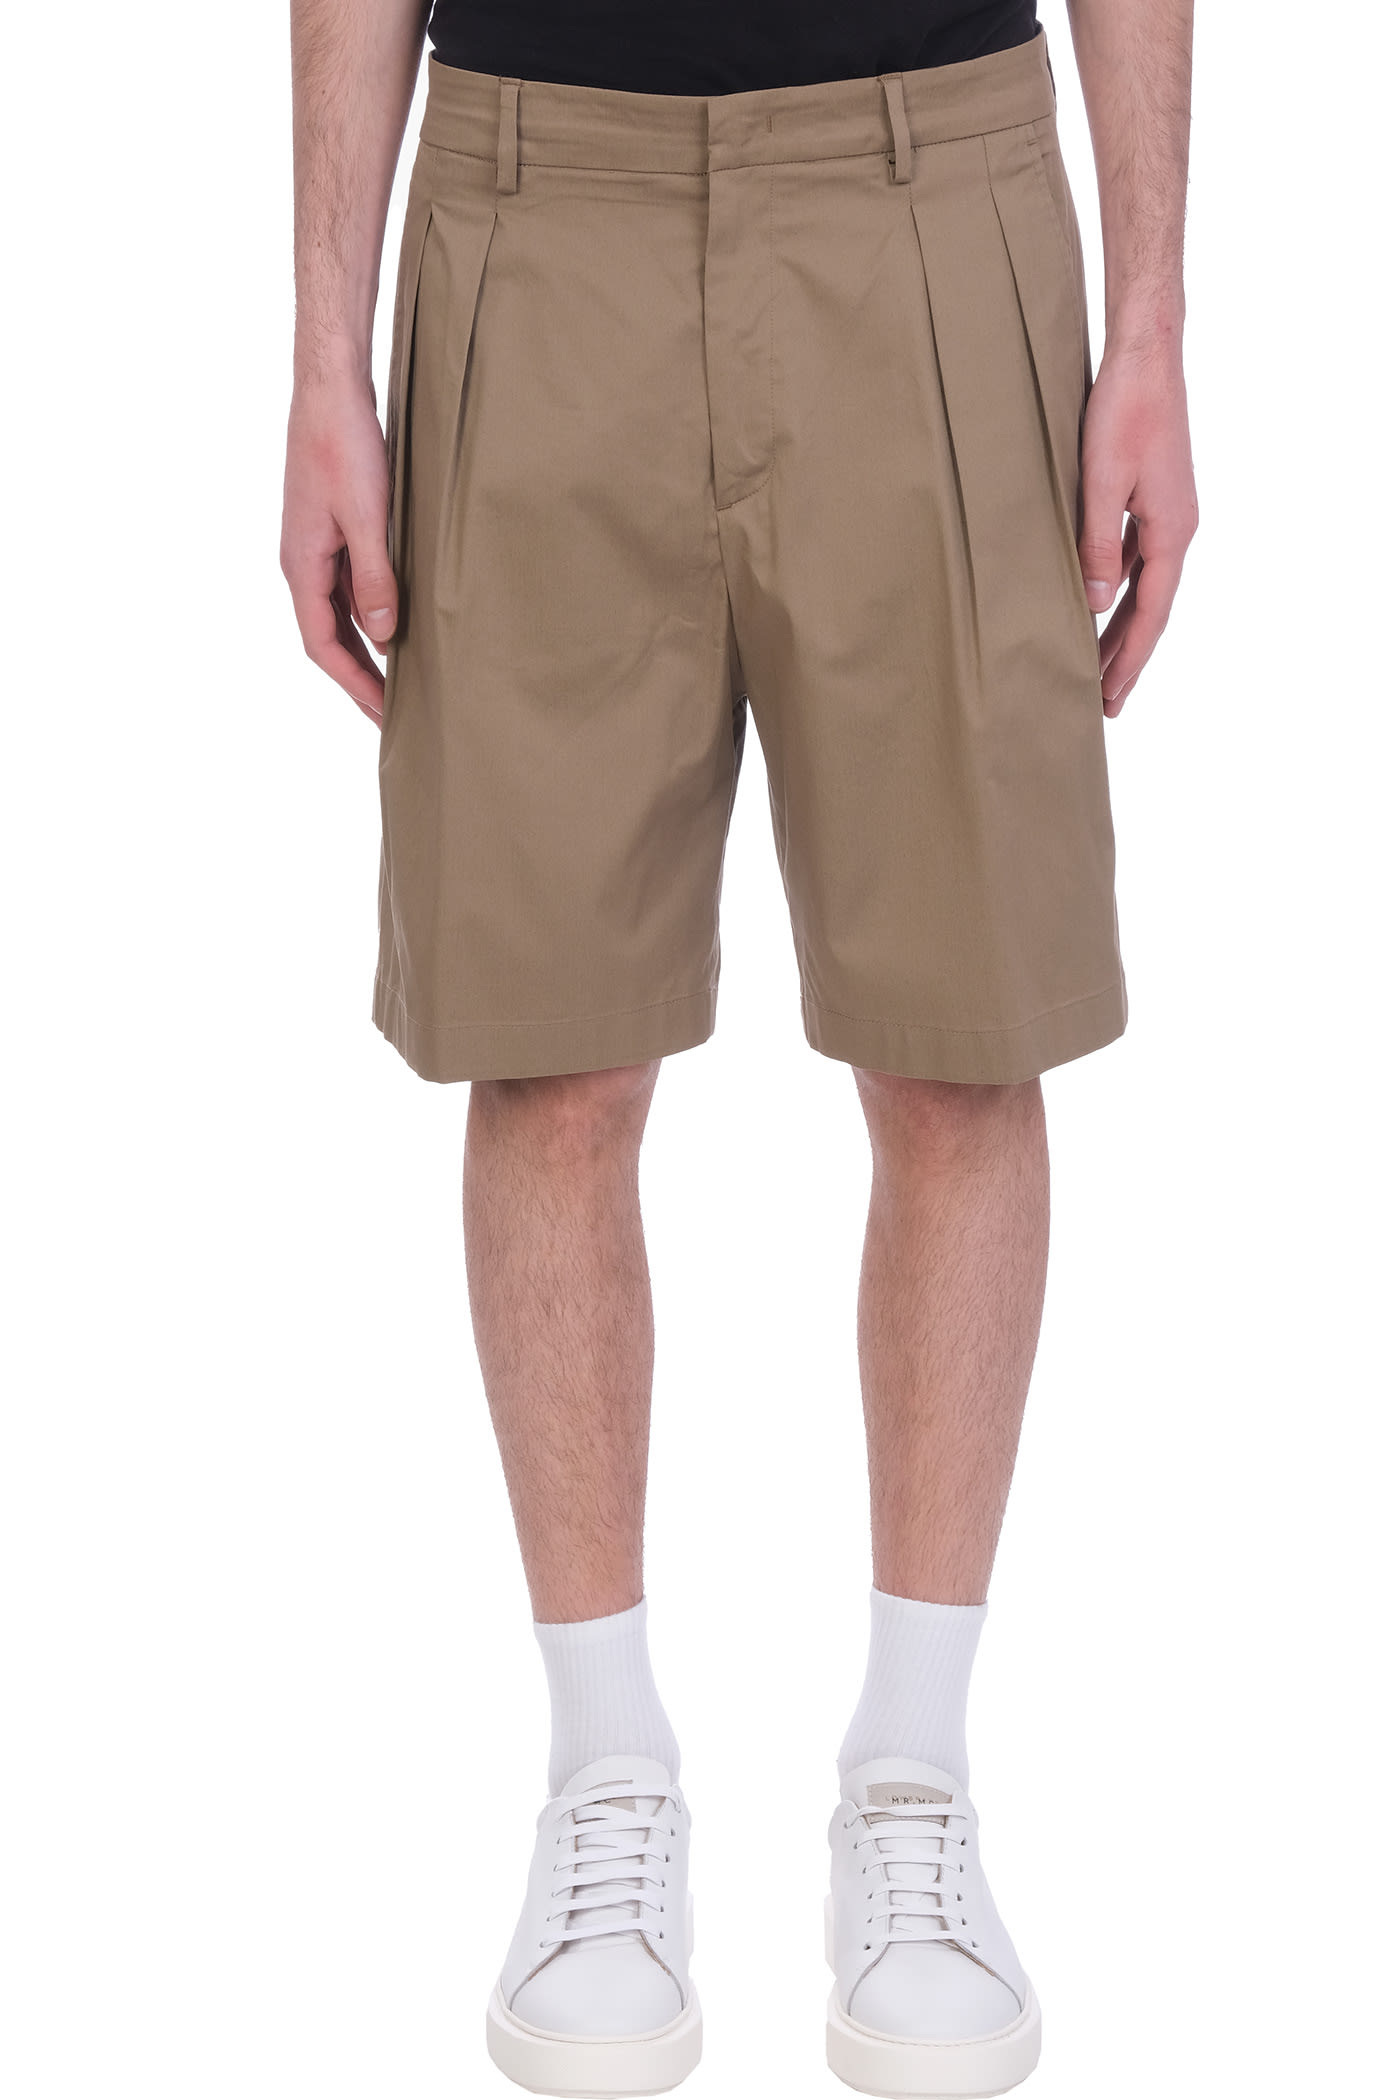 Low Brand Miami Shorts In Beige Cotton